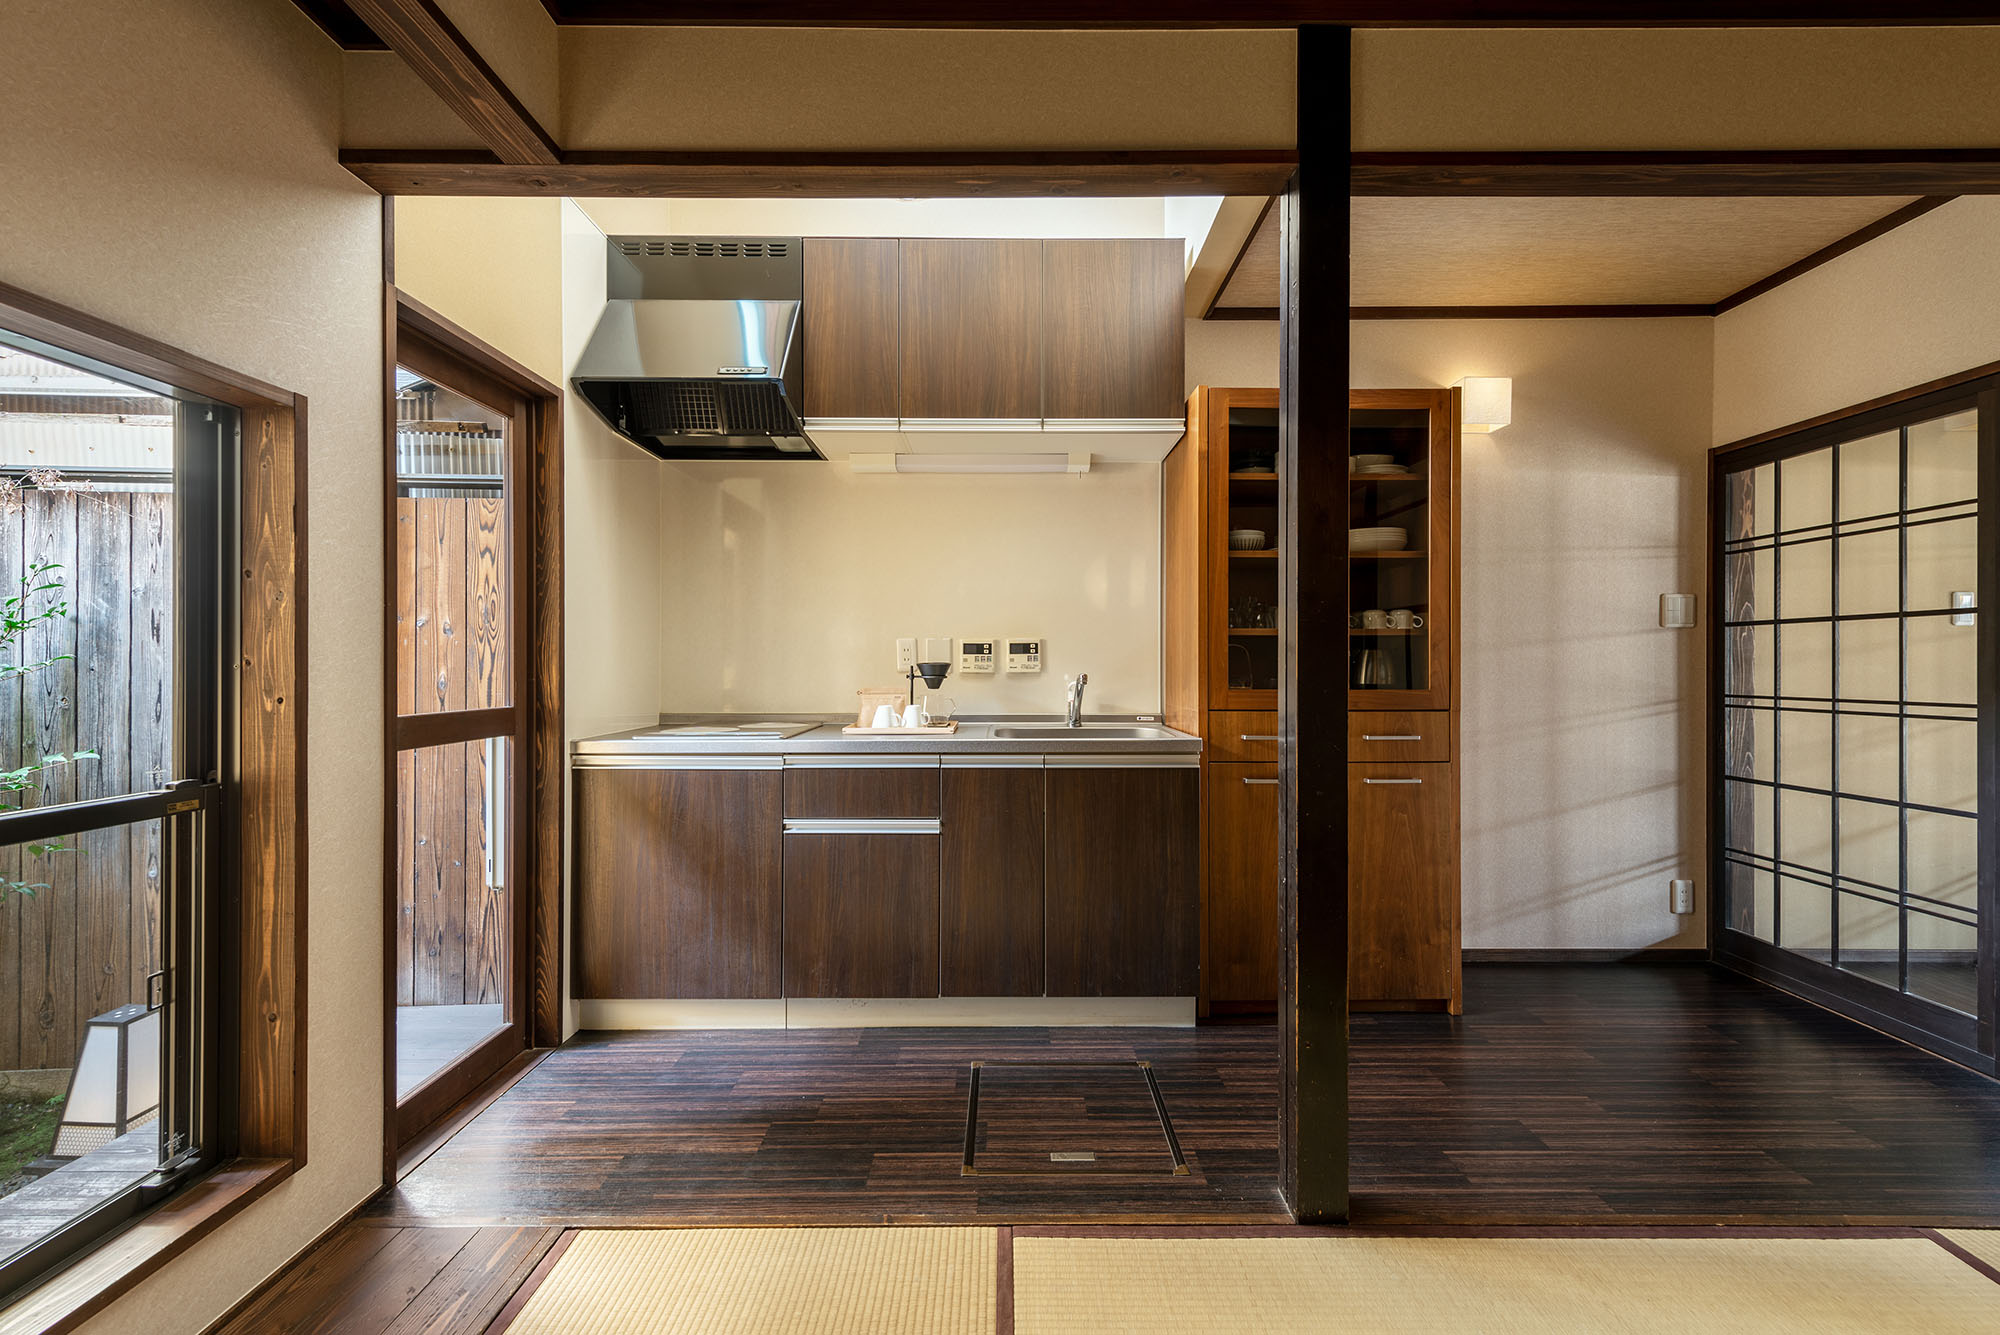 Hibukuro – Machiya House Features